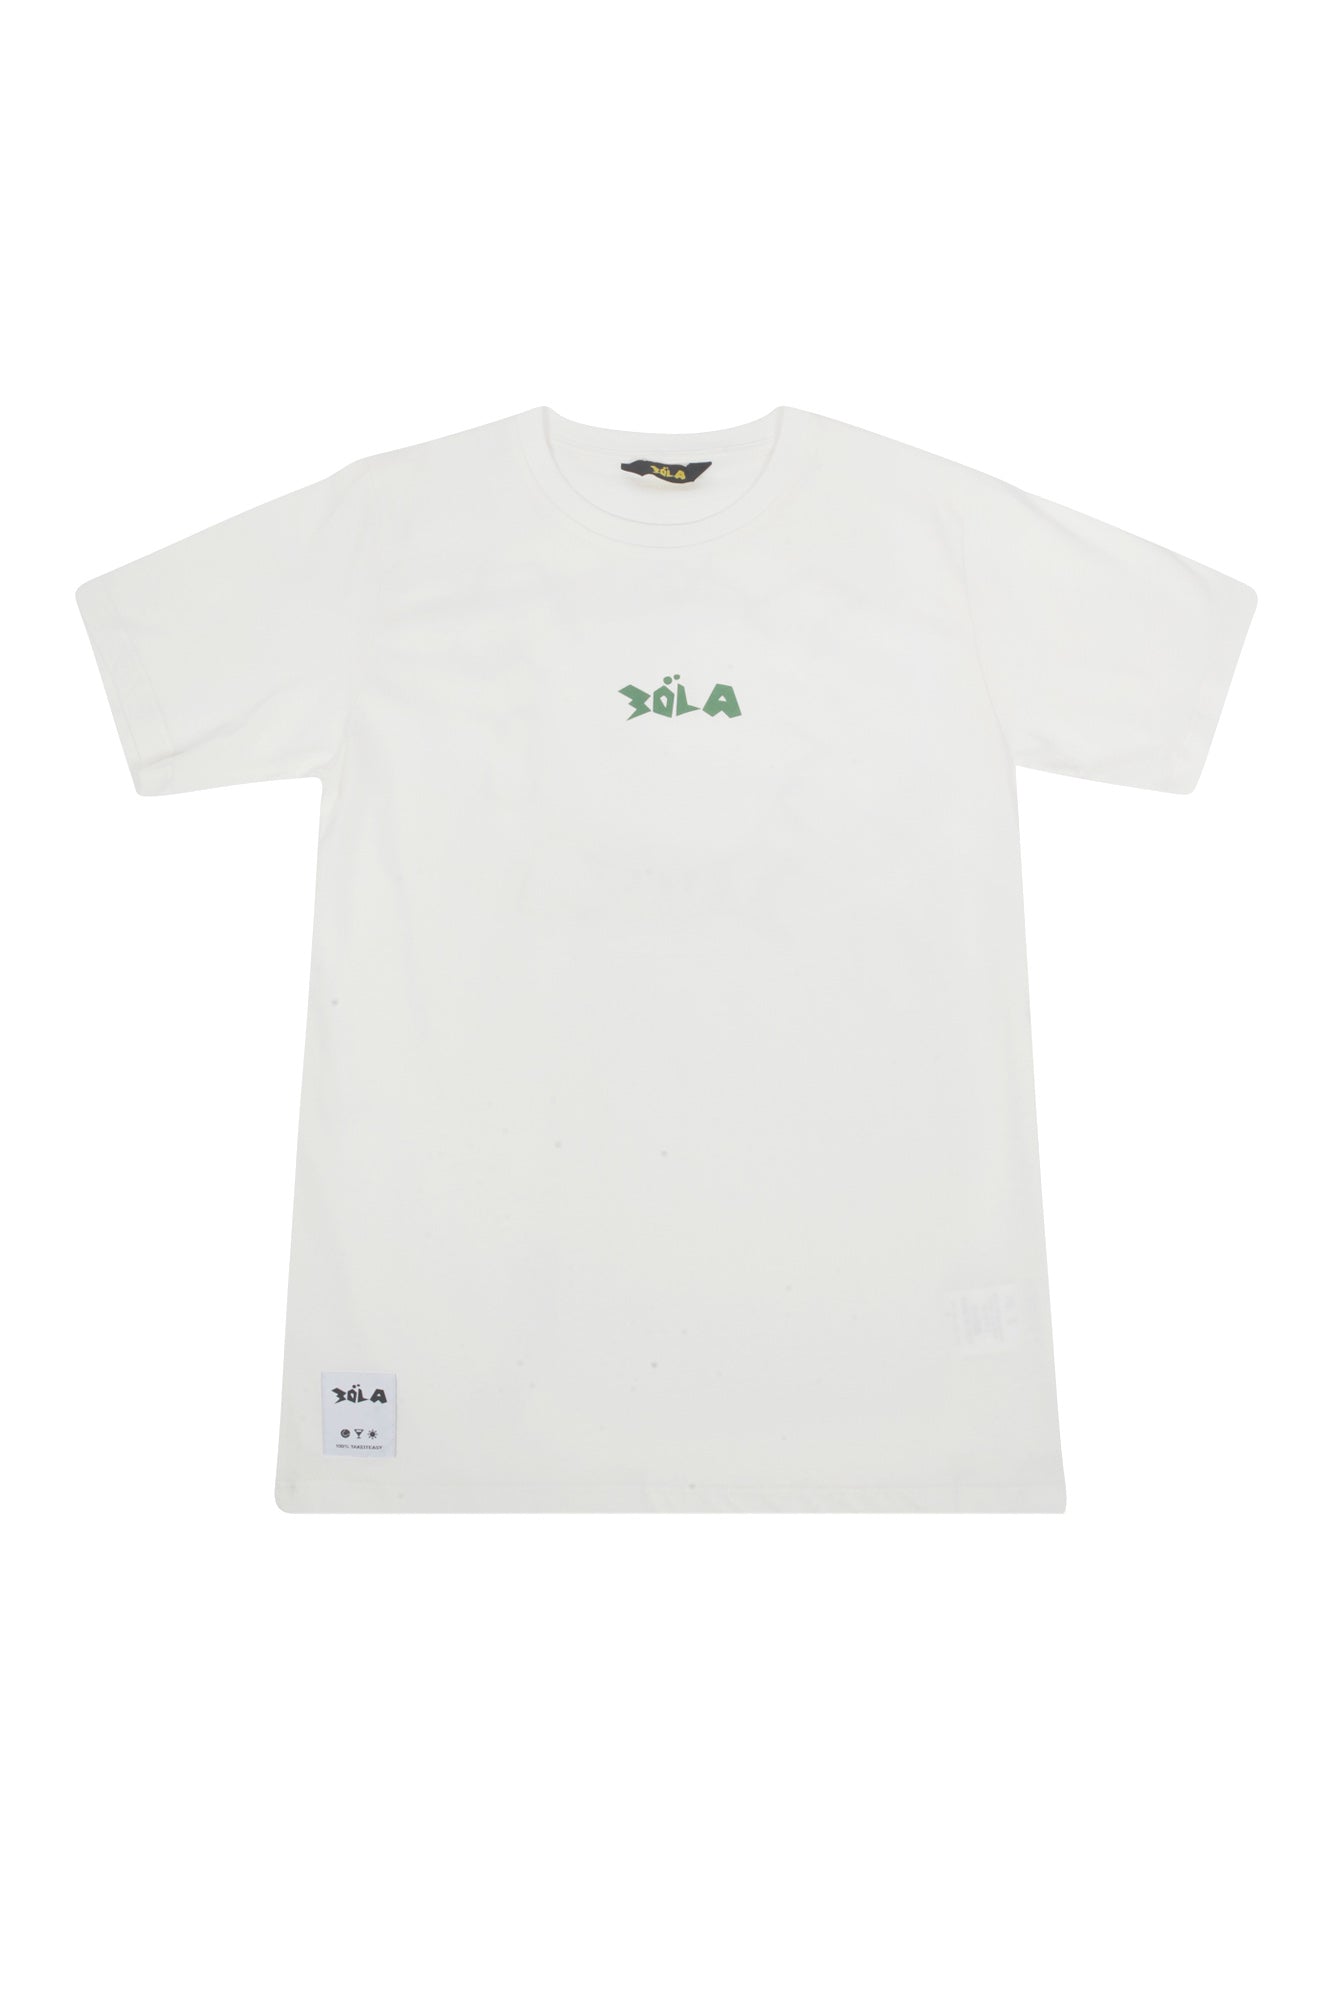 Bola - T-shirt - 431553 - Bianco